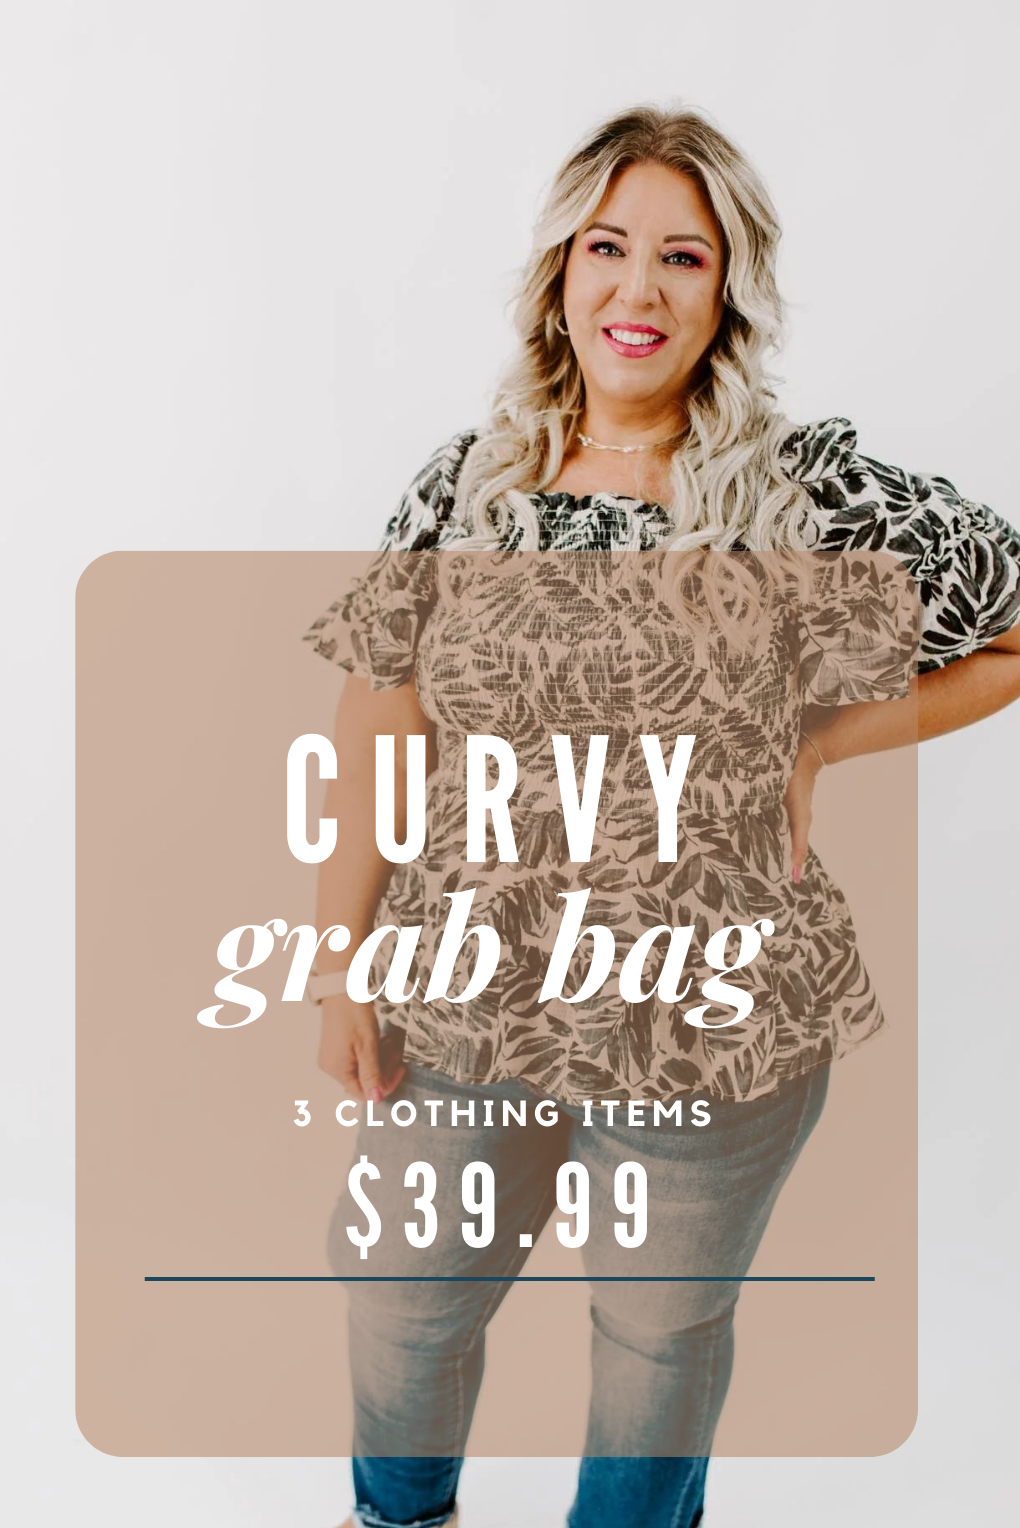 Curvy Grab Bag Deal - 3 for $39.99